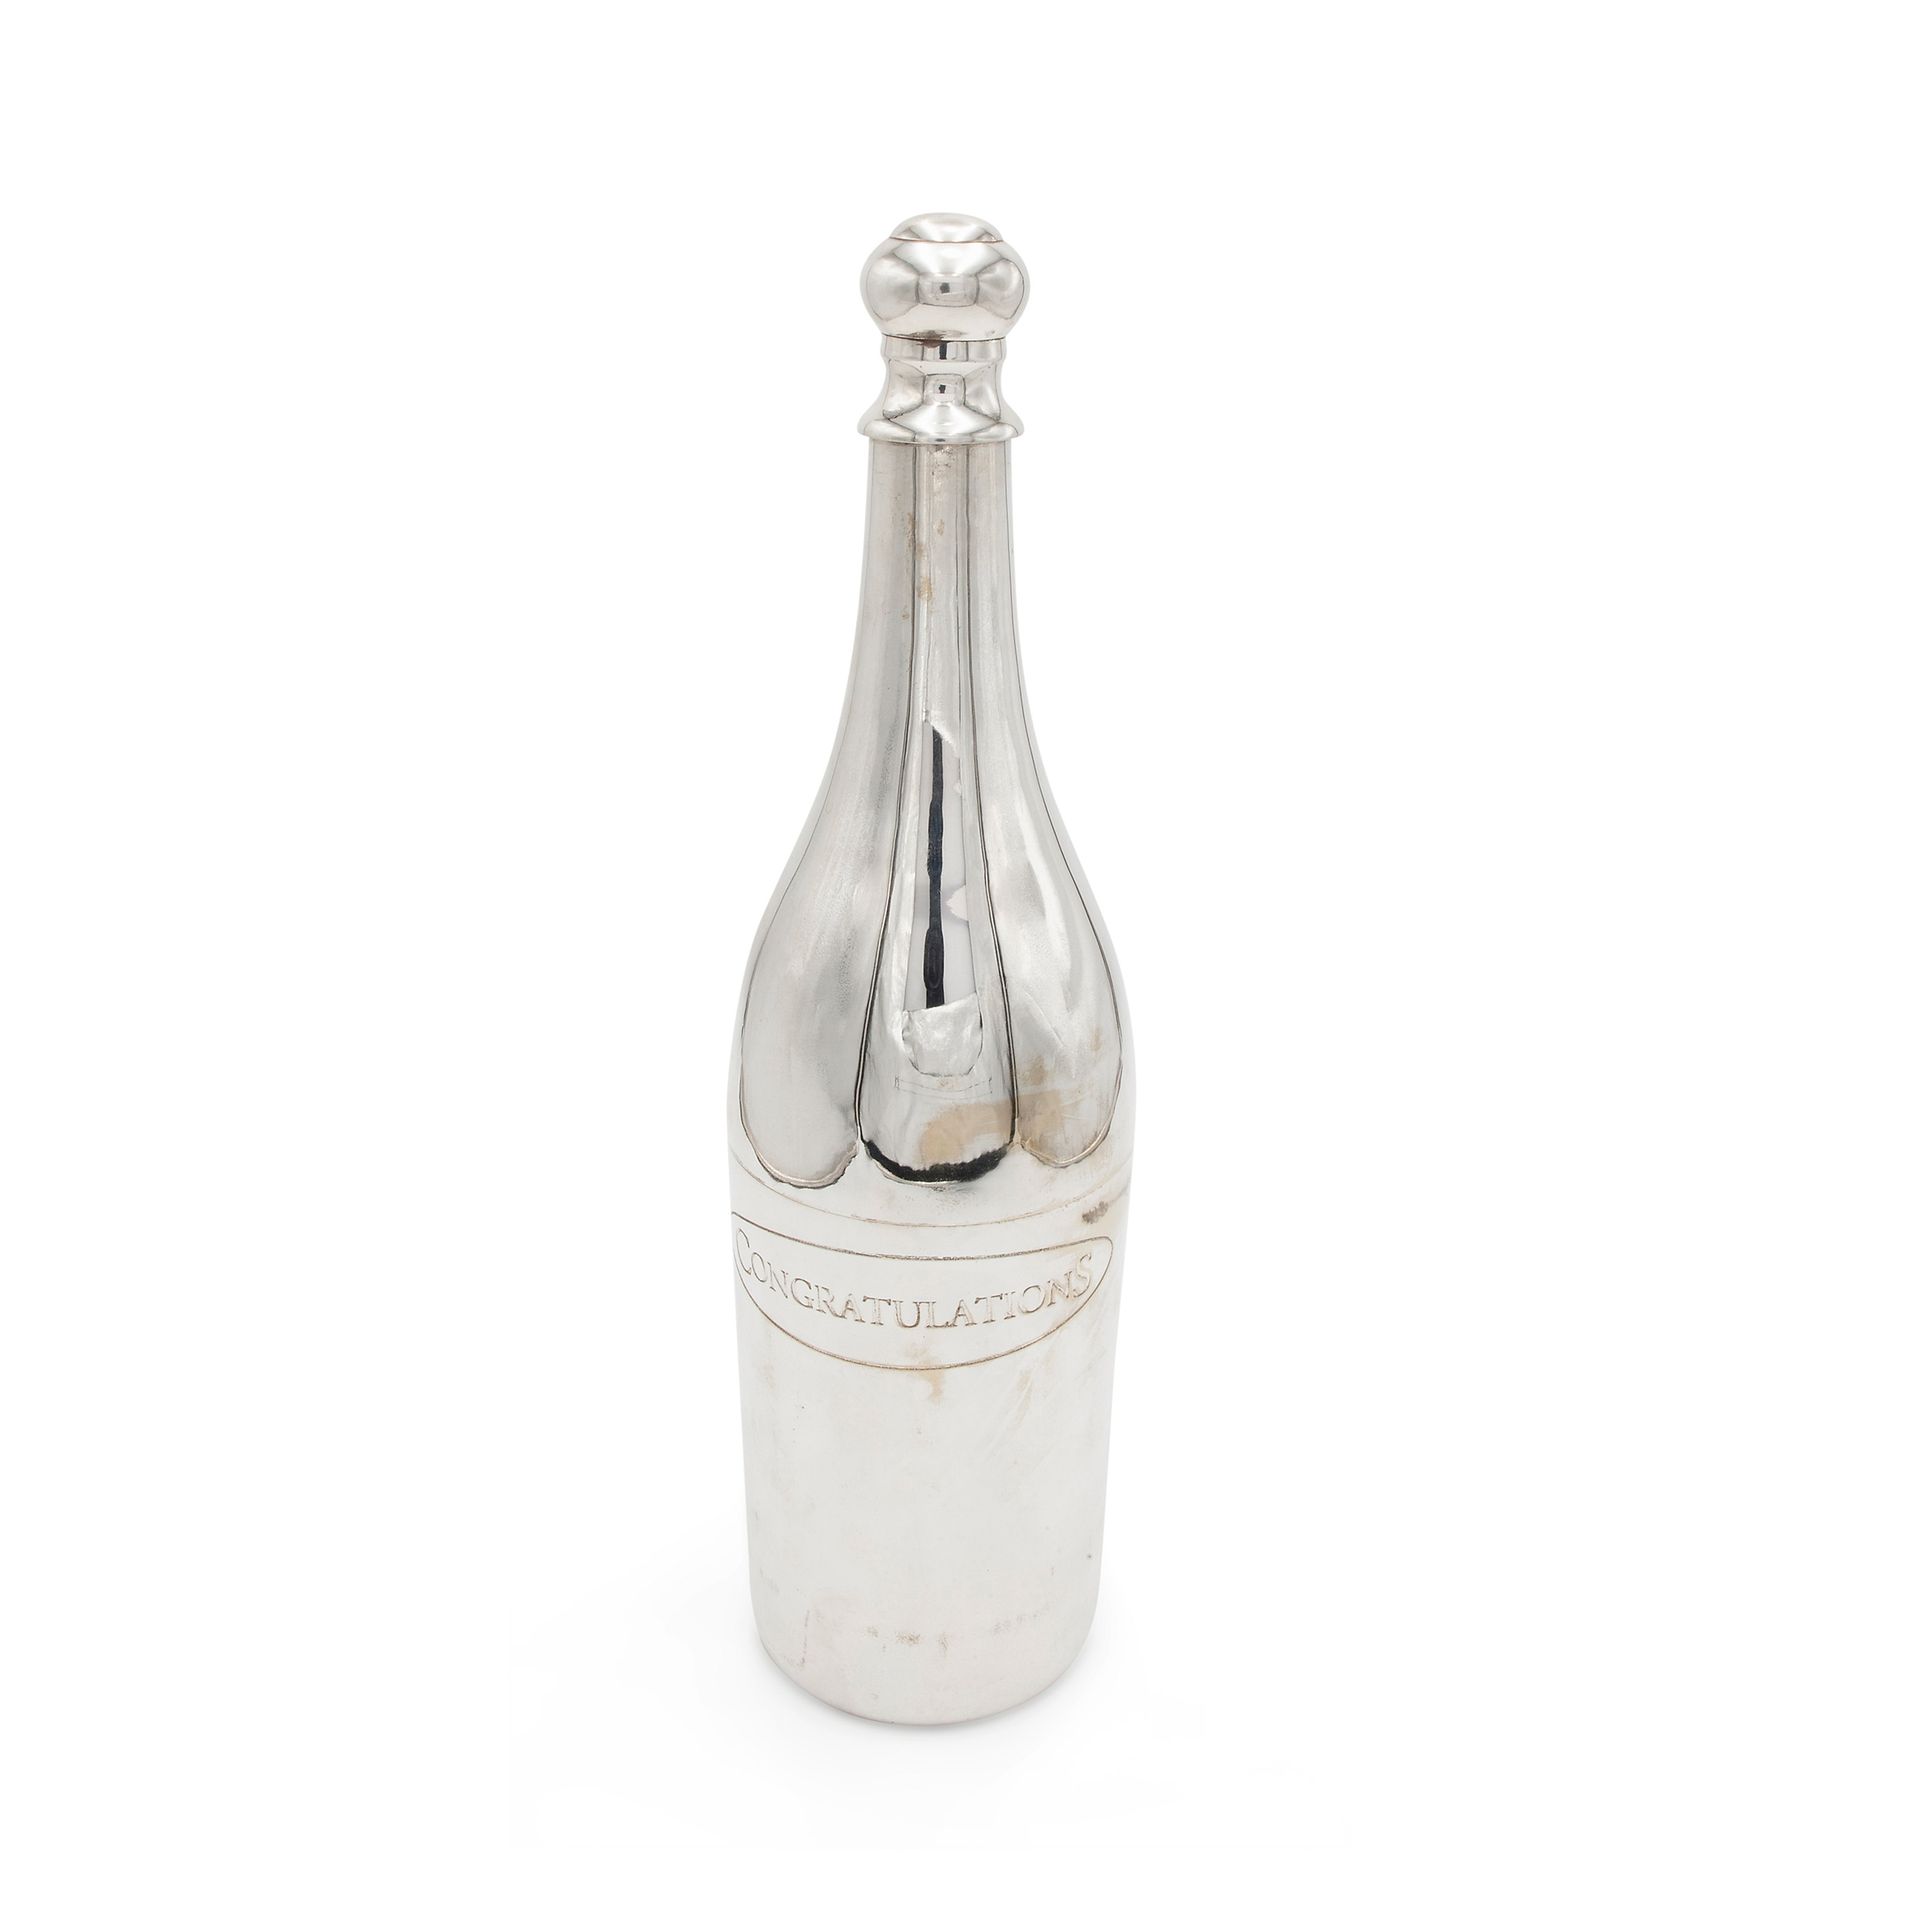 Large Art Deco cocktail shaker bottle-shape 正面有 "祝贺 "字样，由镀铬金属制成 尺寸为15.7x3.7英寸。